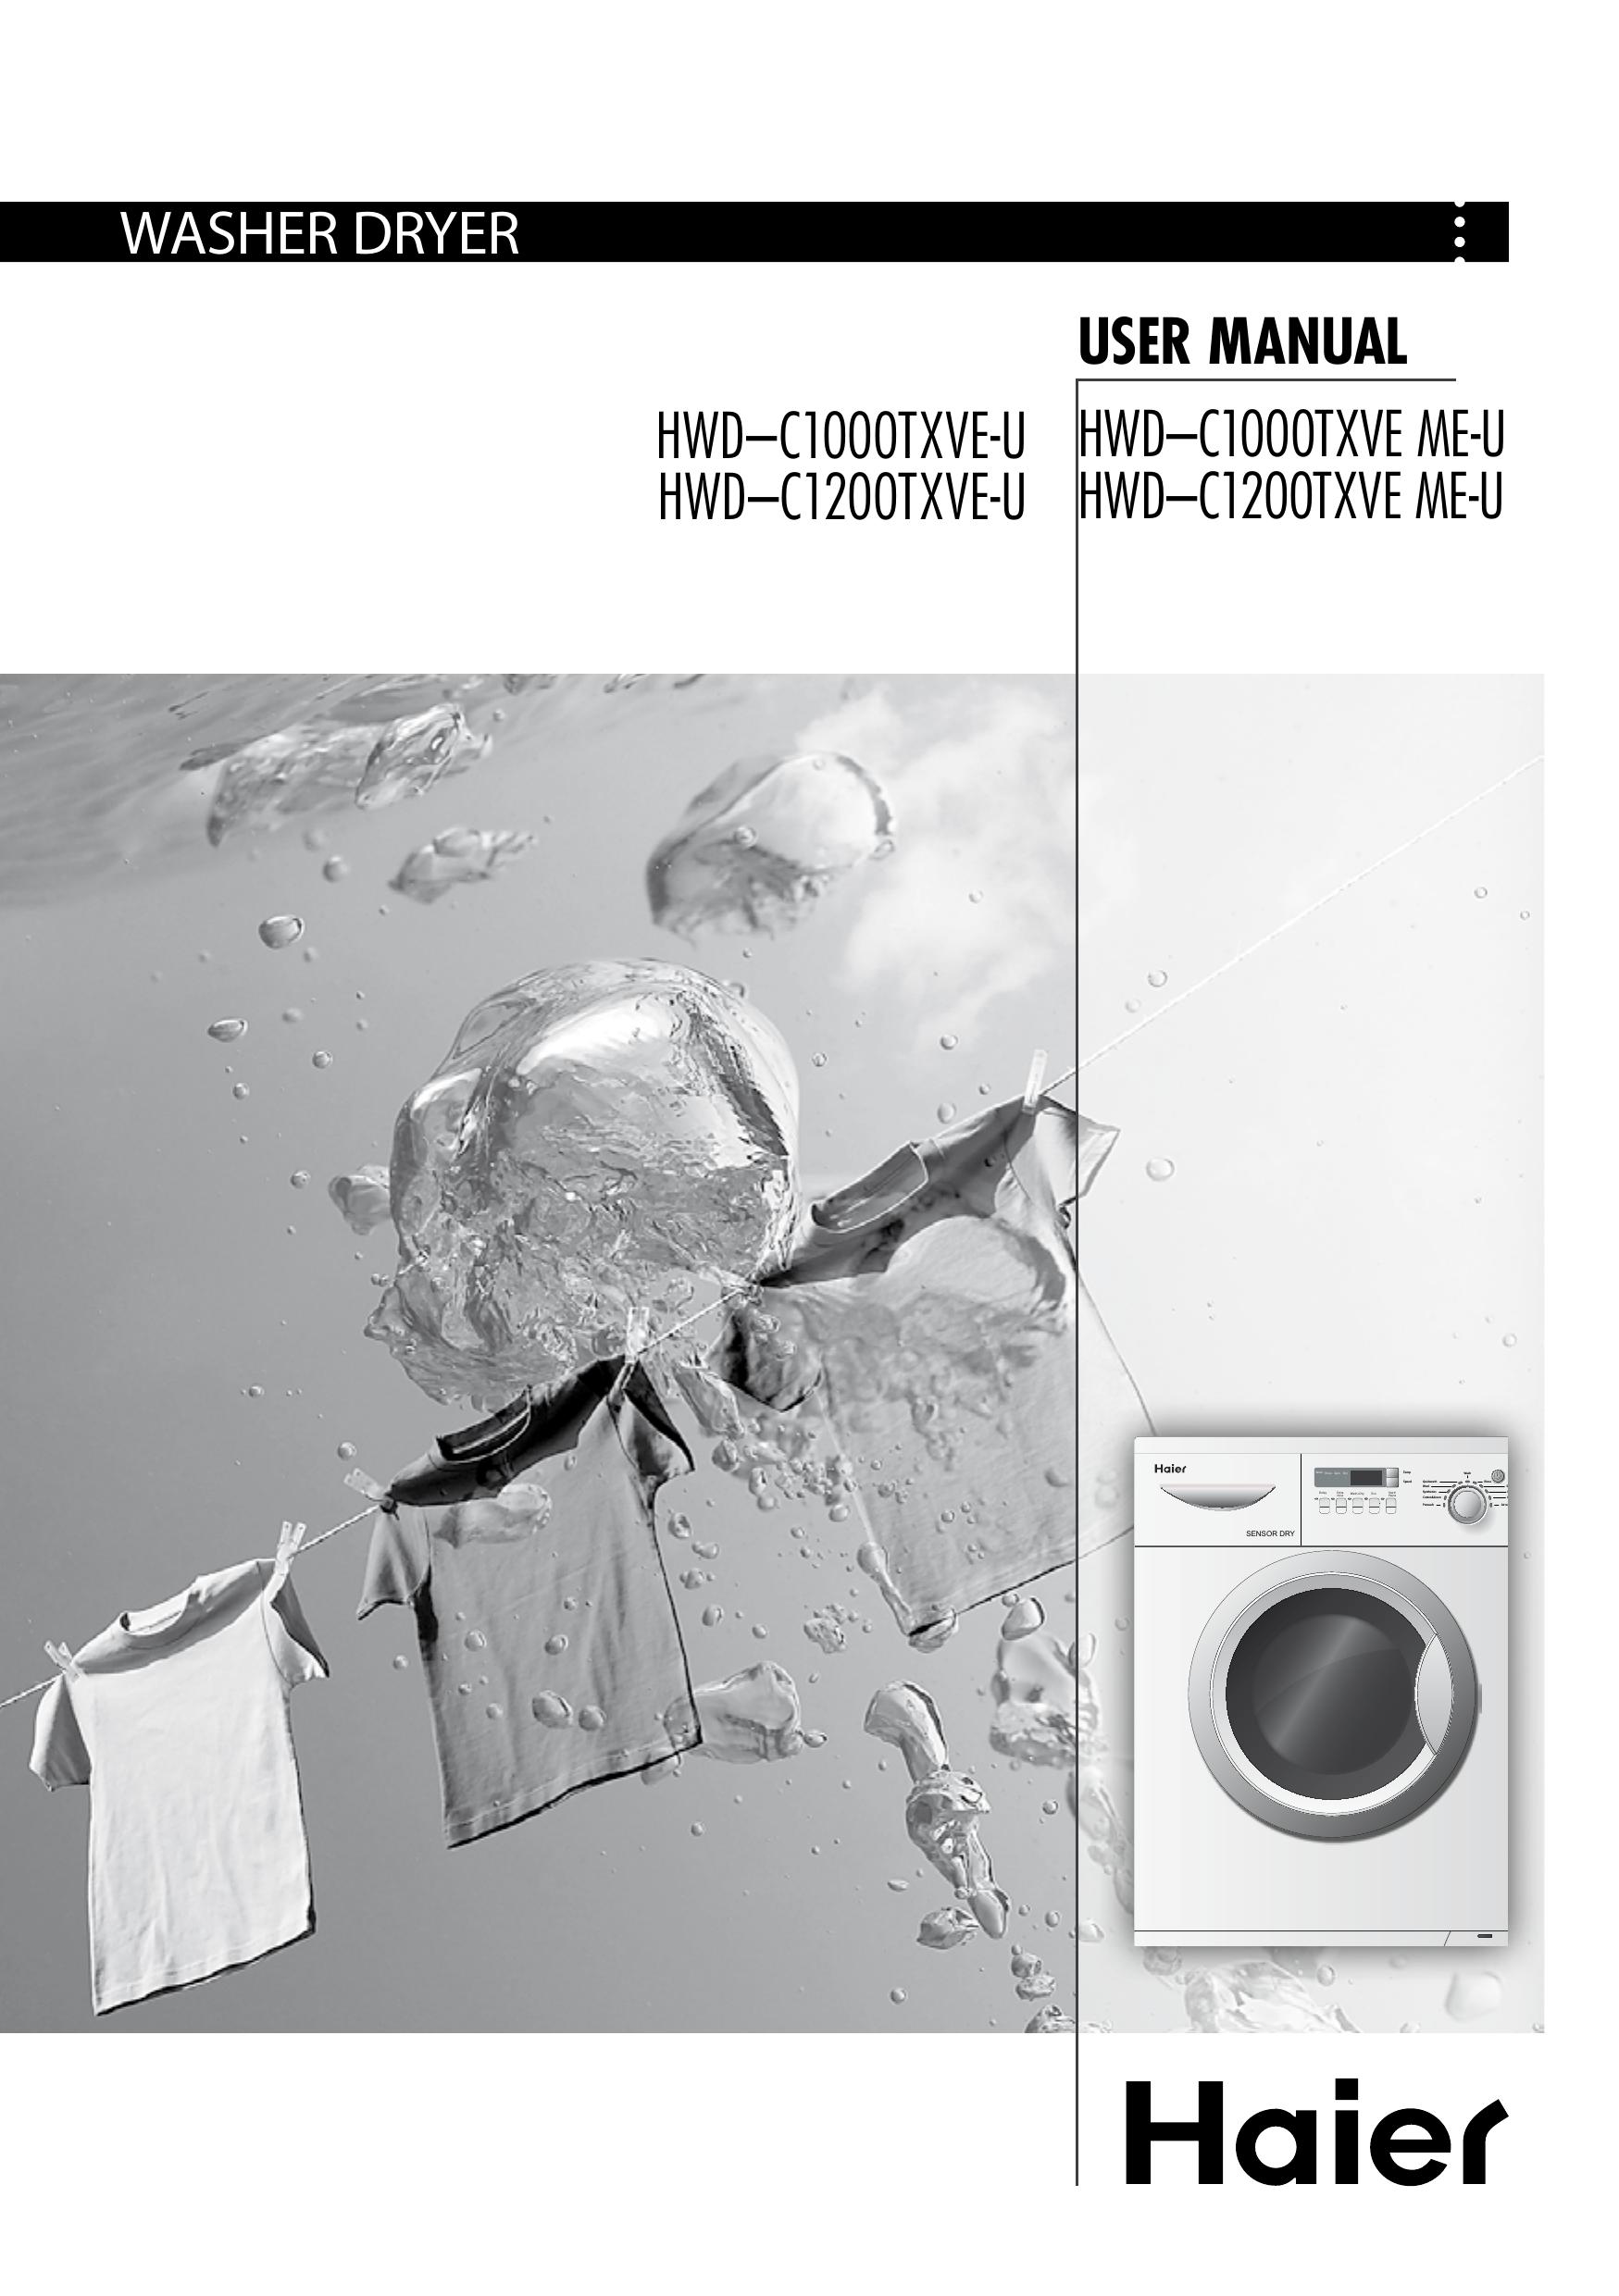 Haier HWDC1200TXVE ME-U Washer/Dryer User Manual